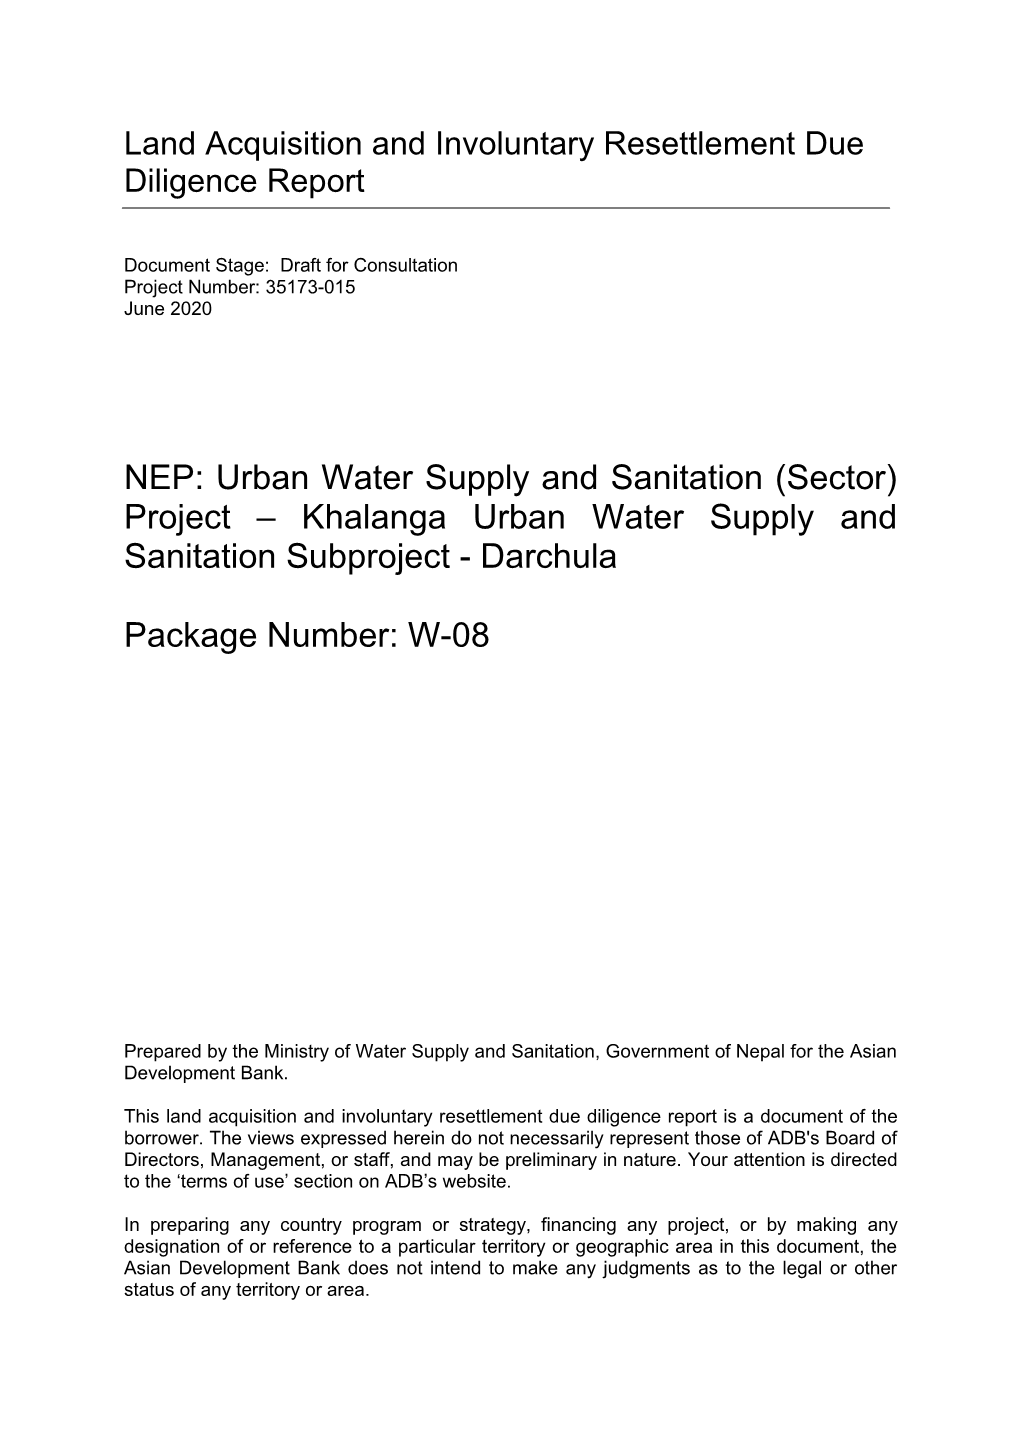 Project – Khalanga Urban Water Supply and Sanitation Subproject - Darchula